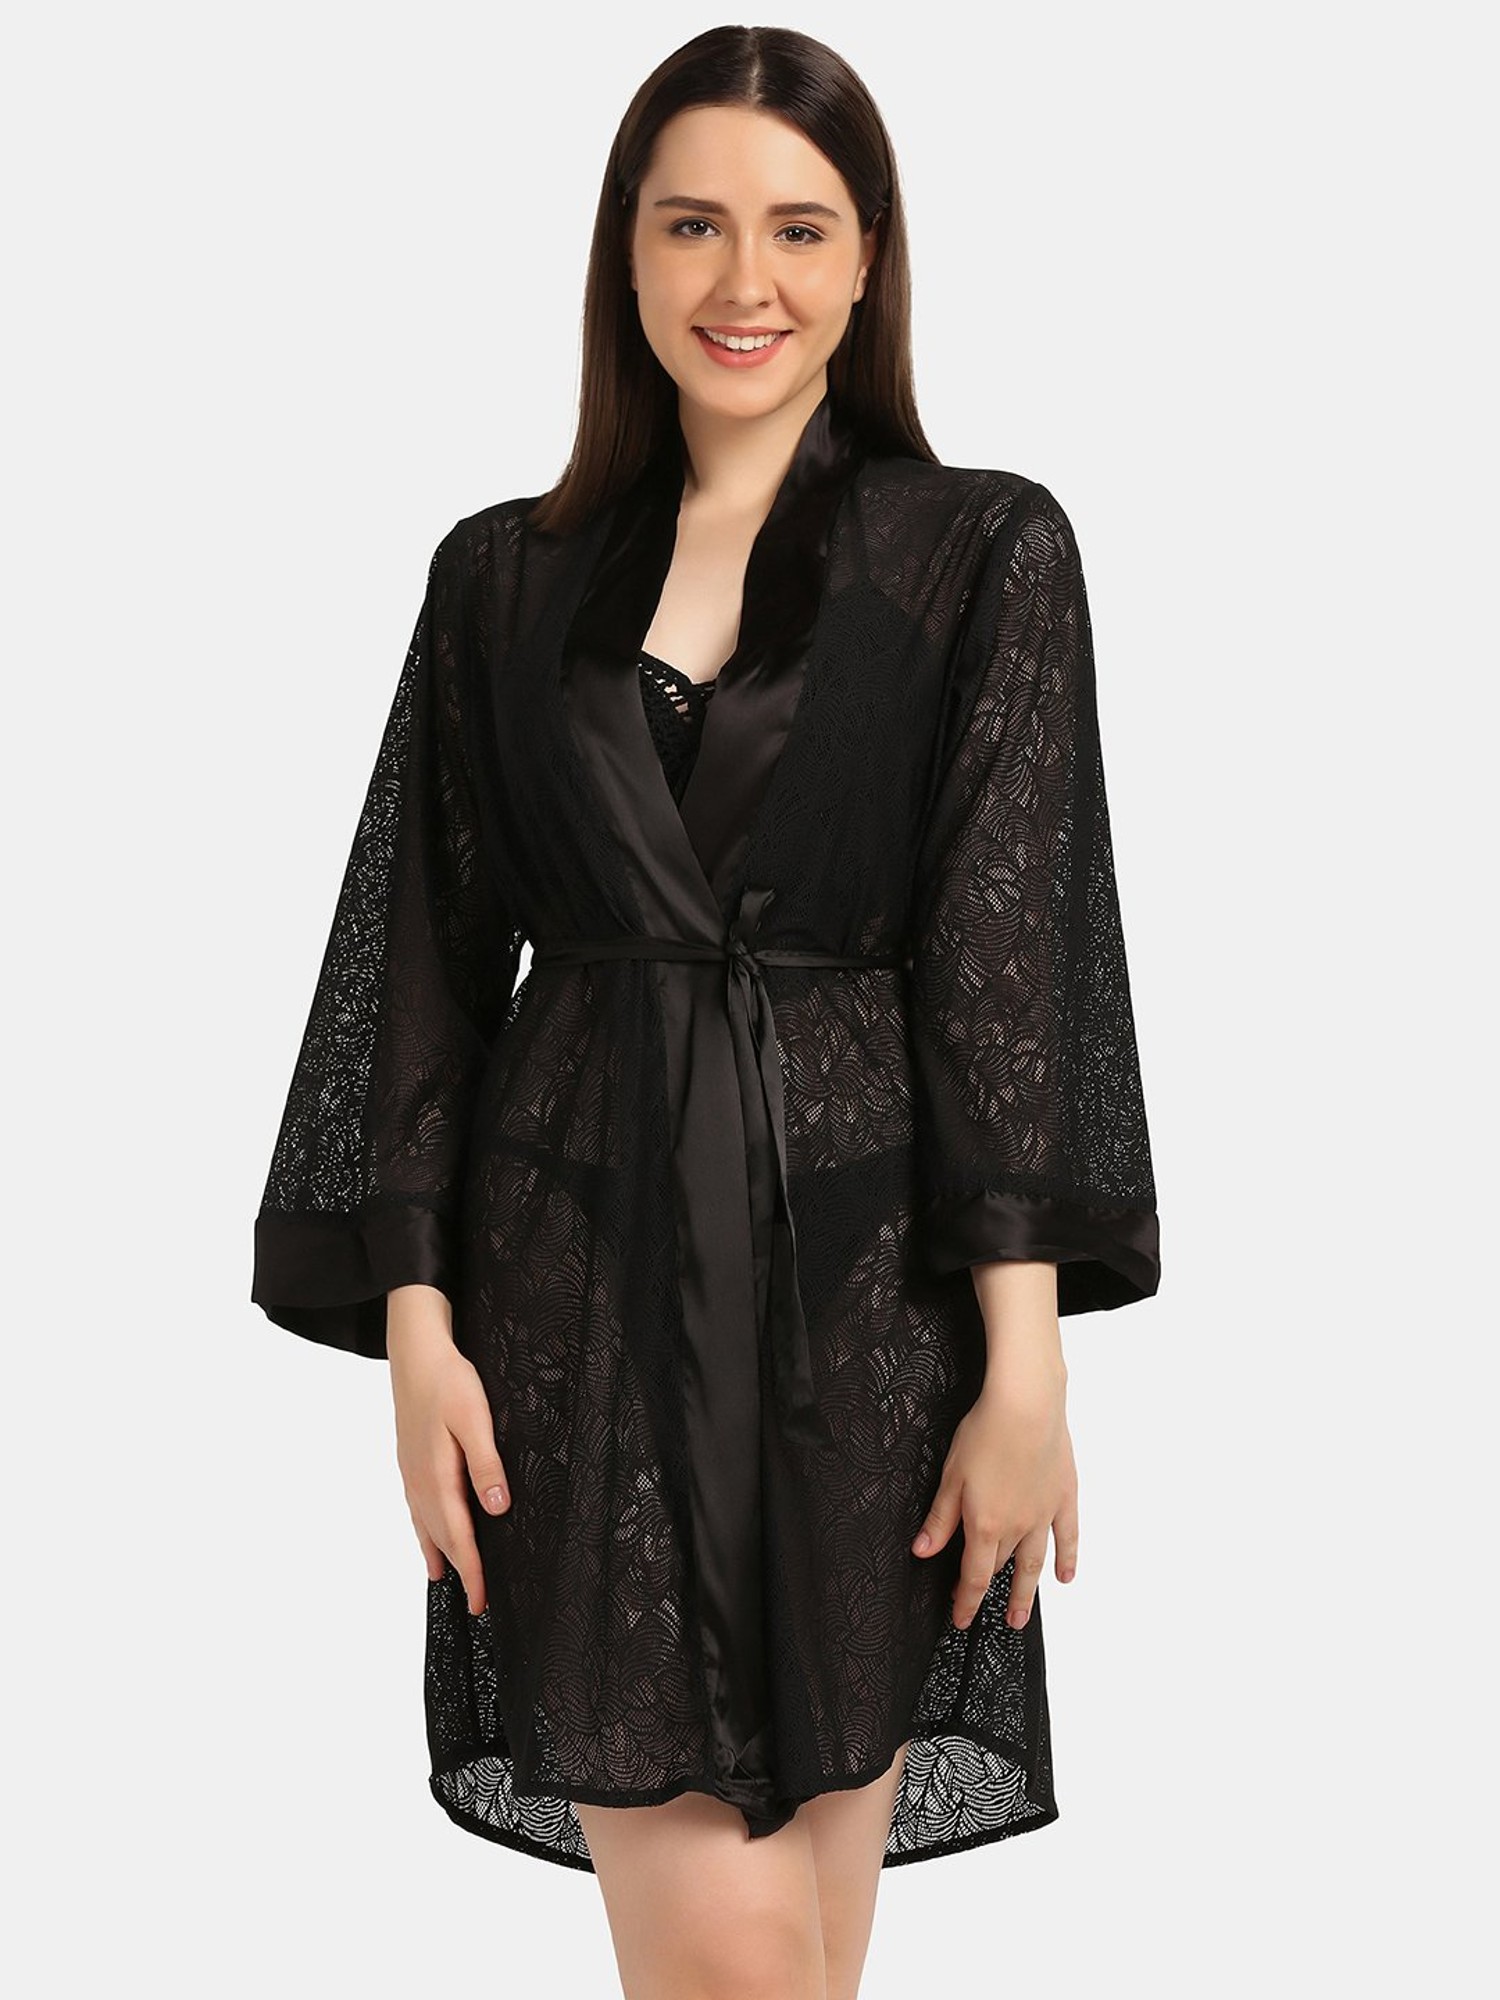 Robes For Women Women Long Silk Kimono Dressing Gown Babydoll Lace Lingerie Bath  Robe Black ,ac1102 - Walmart.com